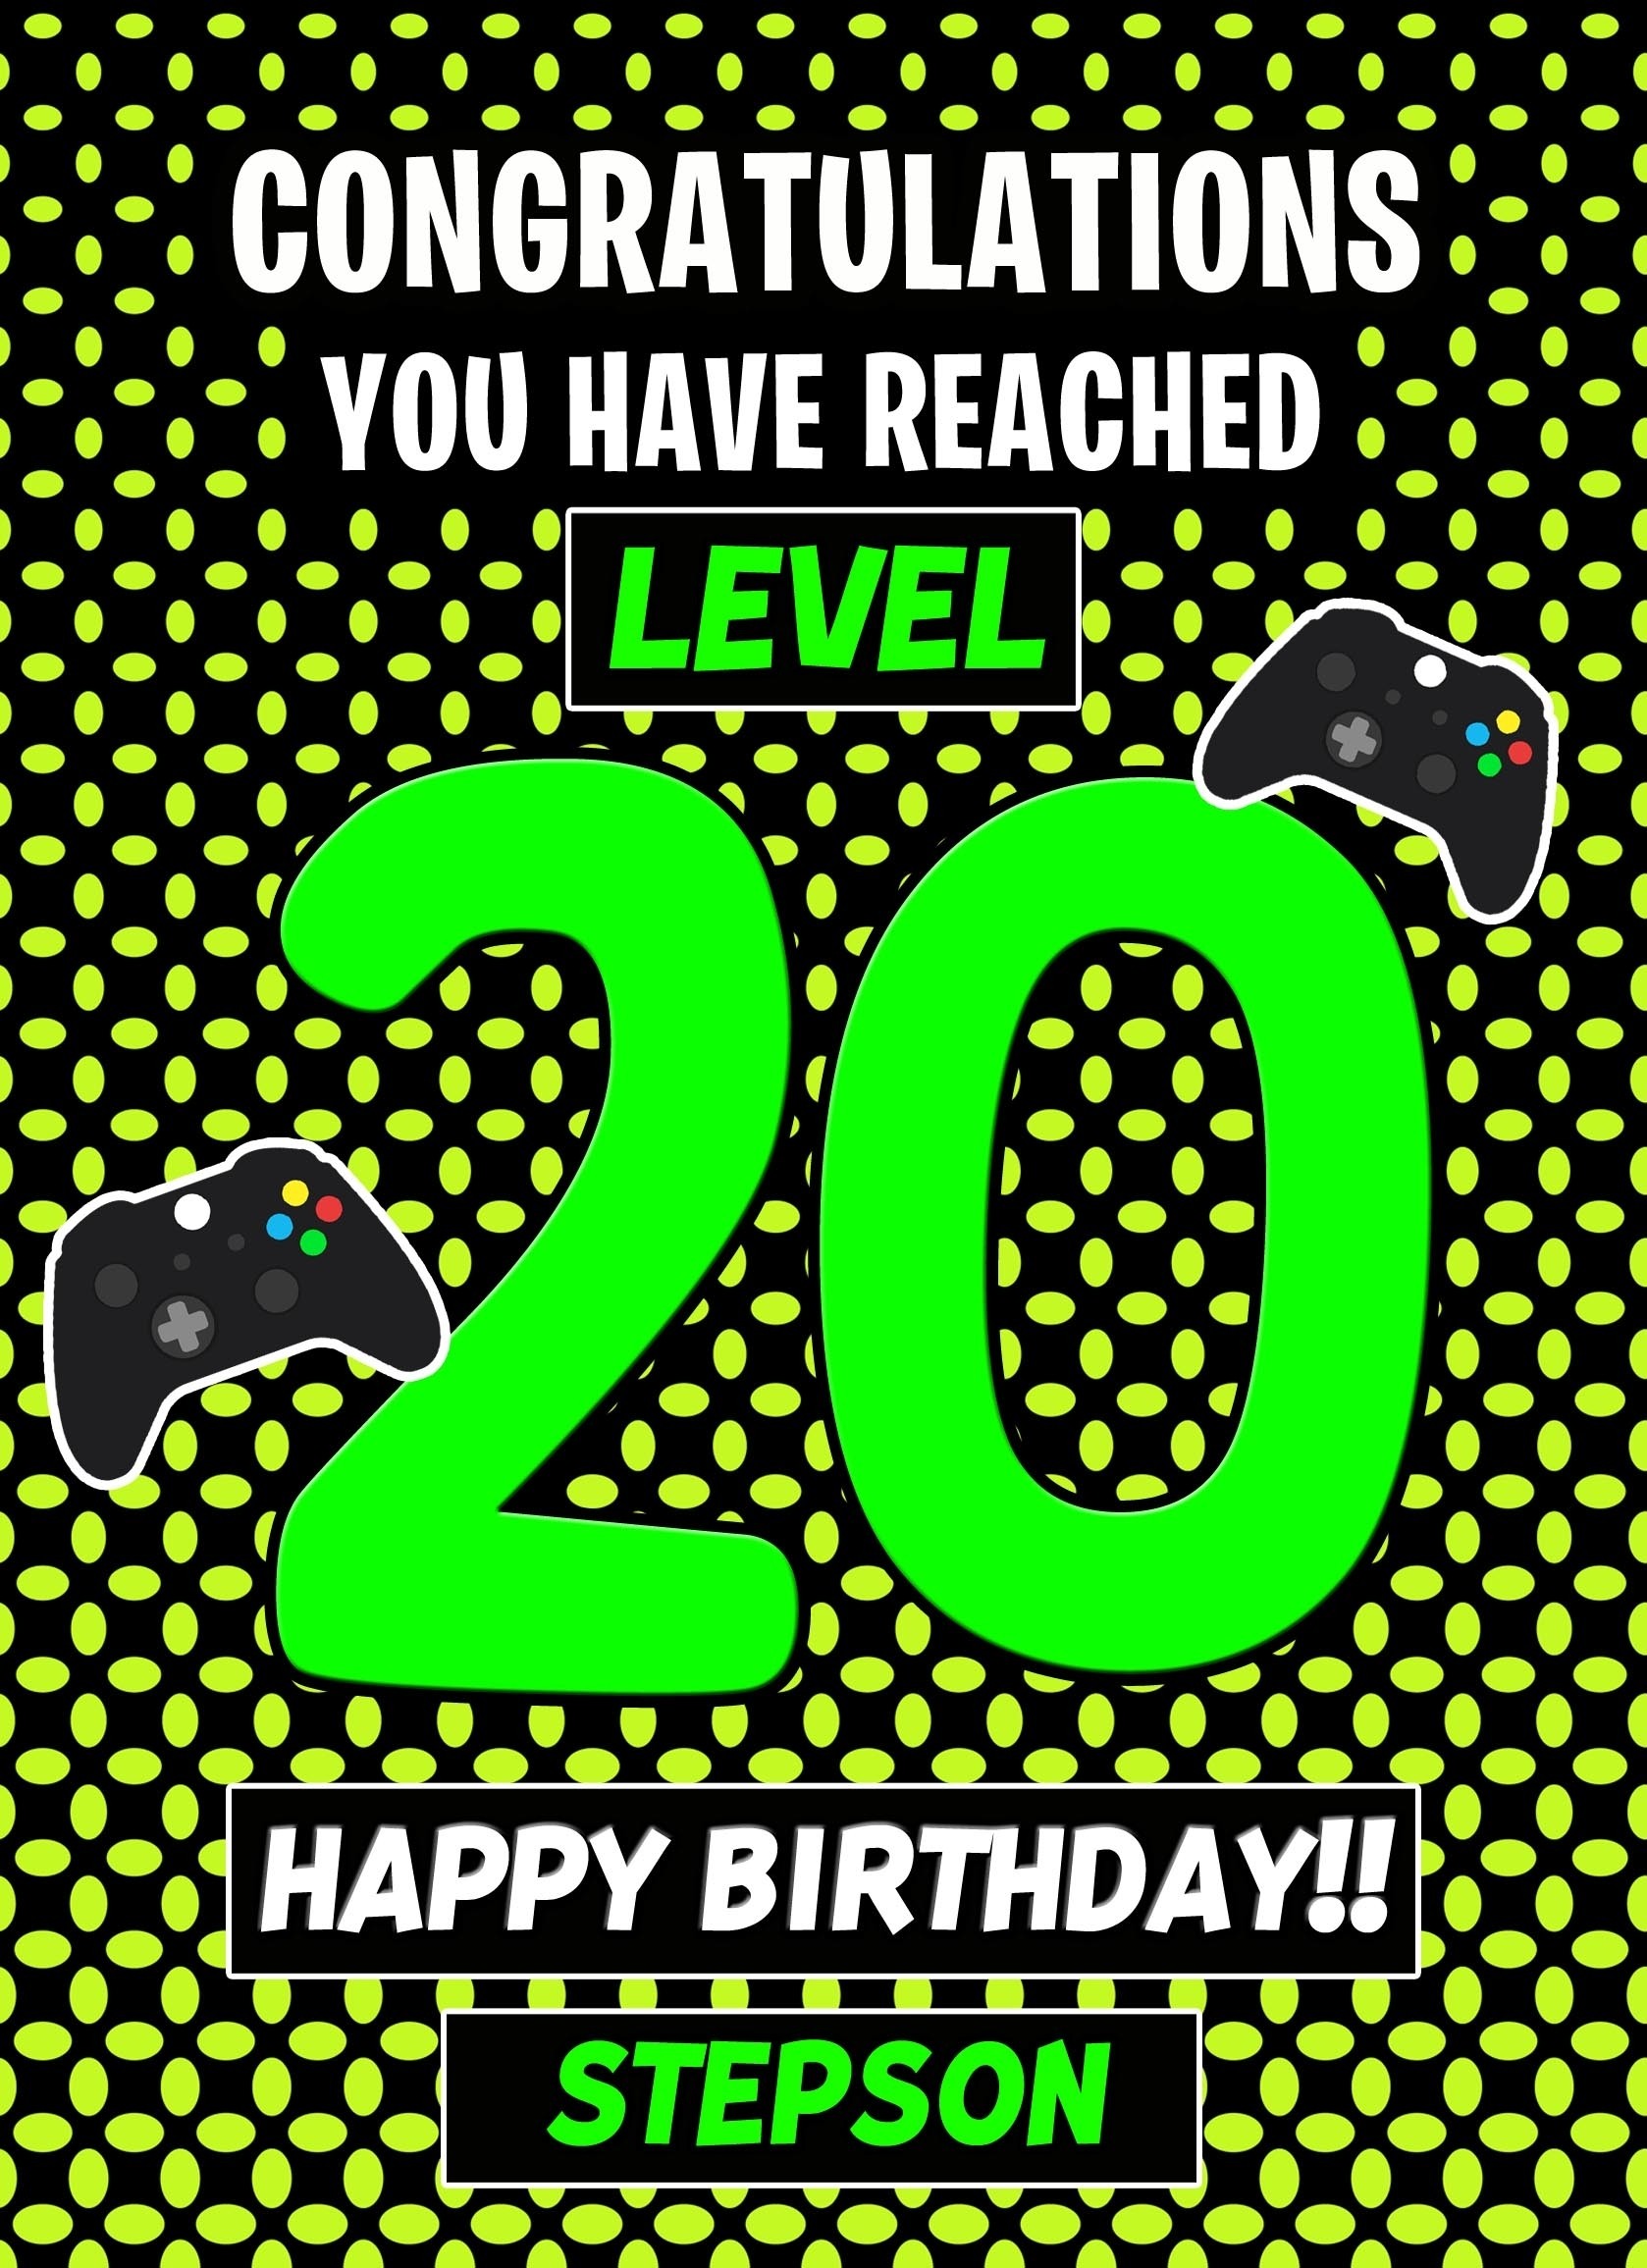 Stepson 20th Birthday Card (Level Up Gamer)